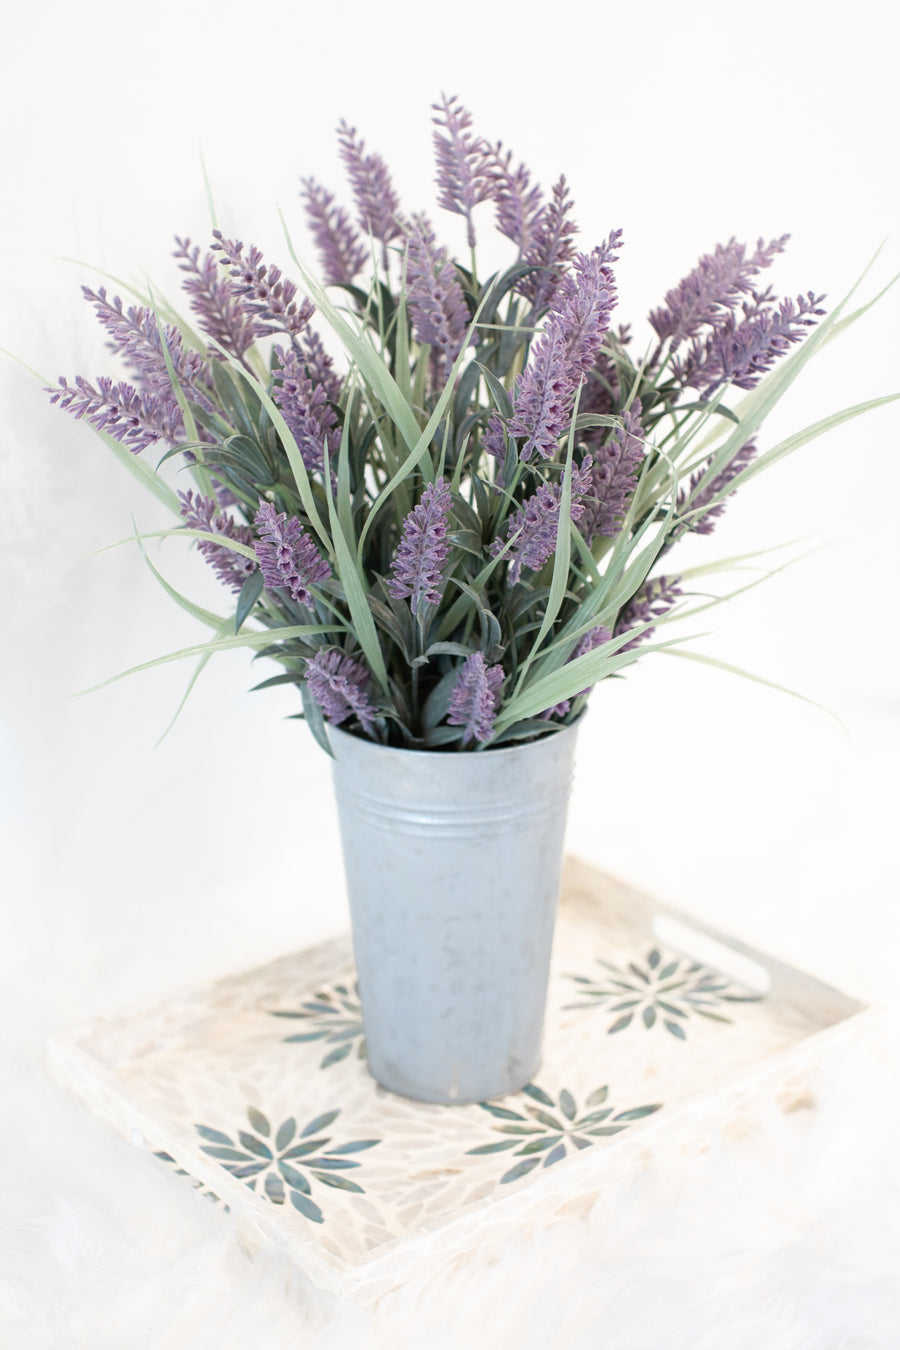 artificial lavender plant in pot for home decoration idea